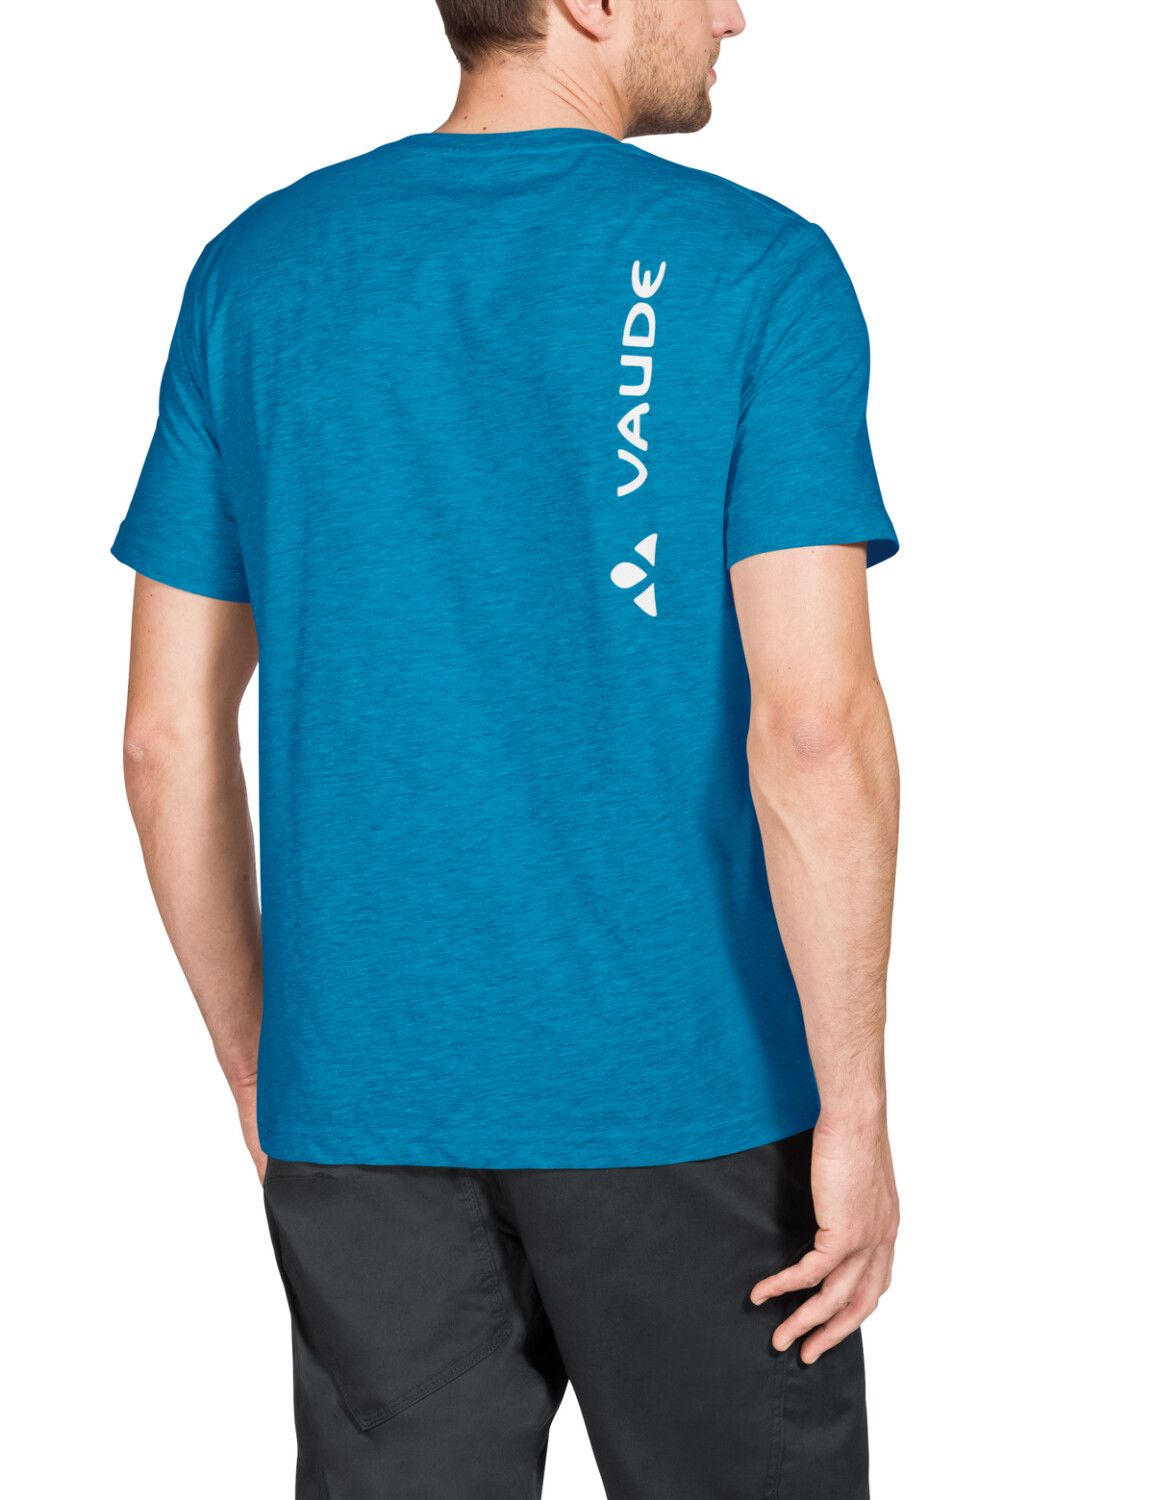 VAUDE Men's Brand T-Shirt (Bild 19)